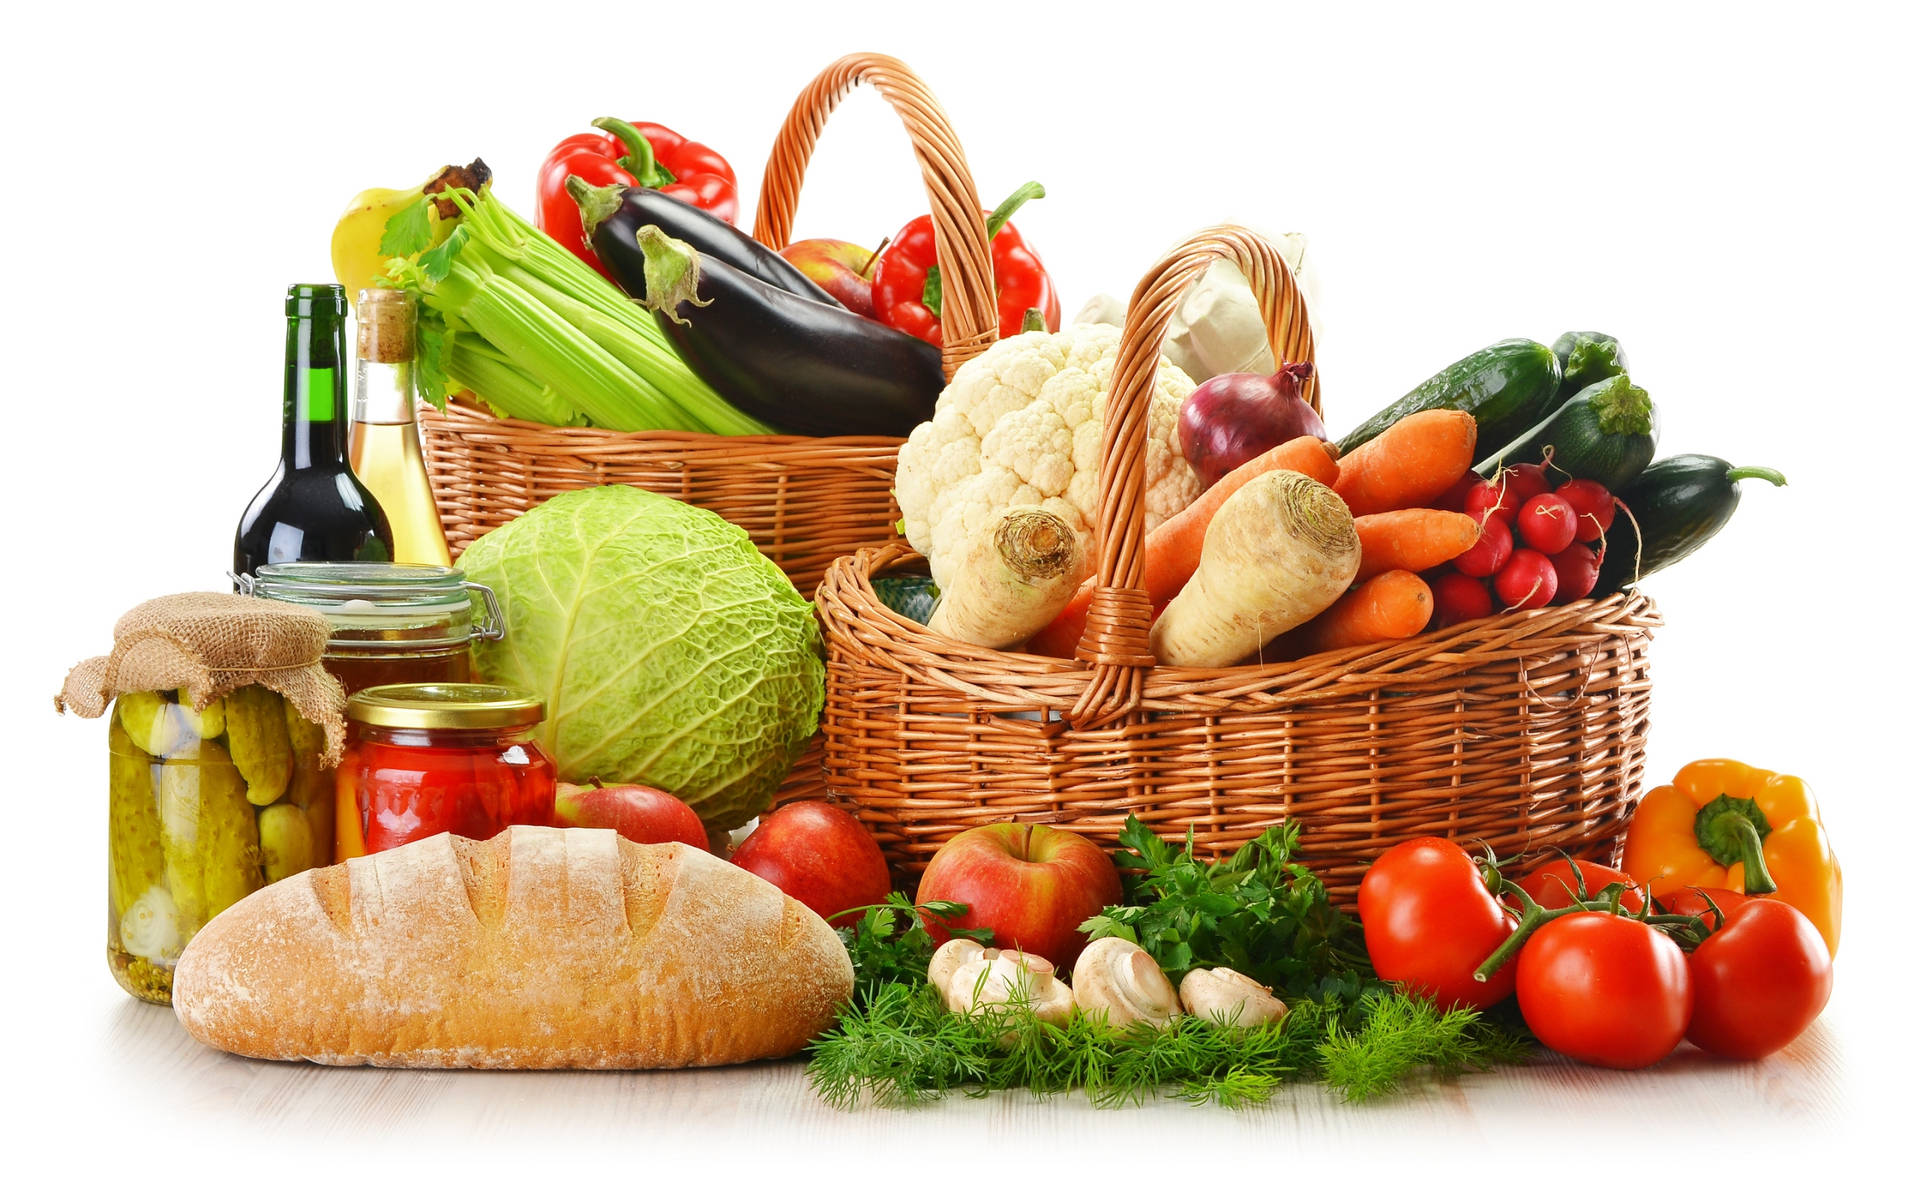 Vegetable And Fruit Baskets Background